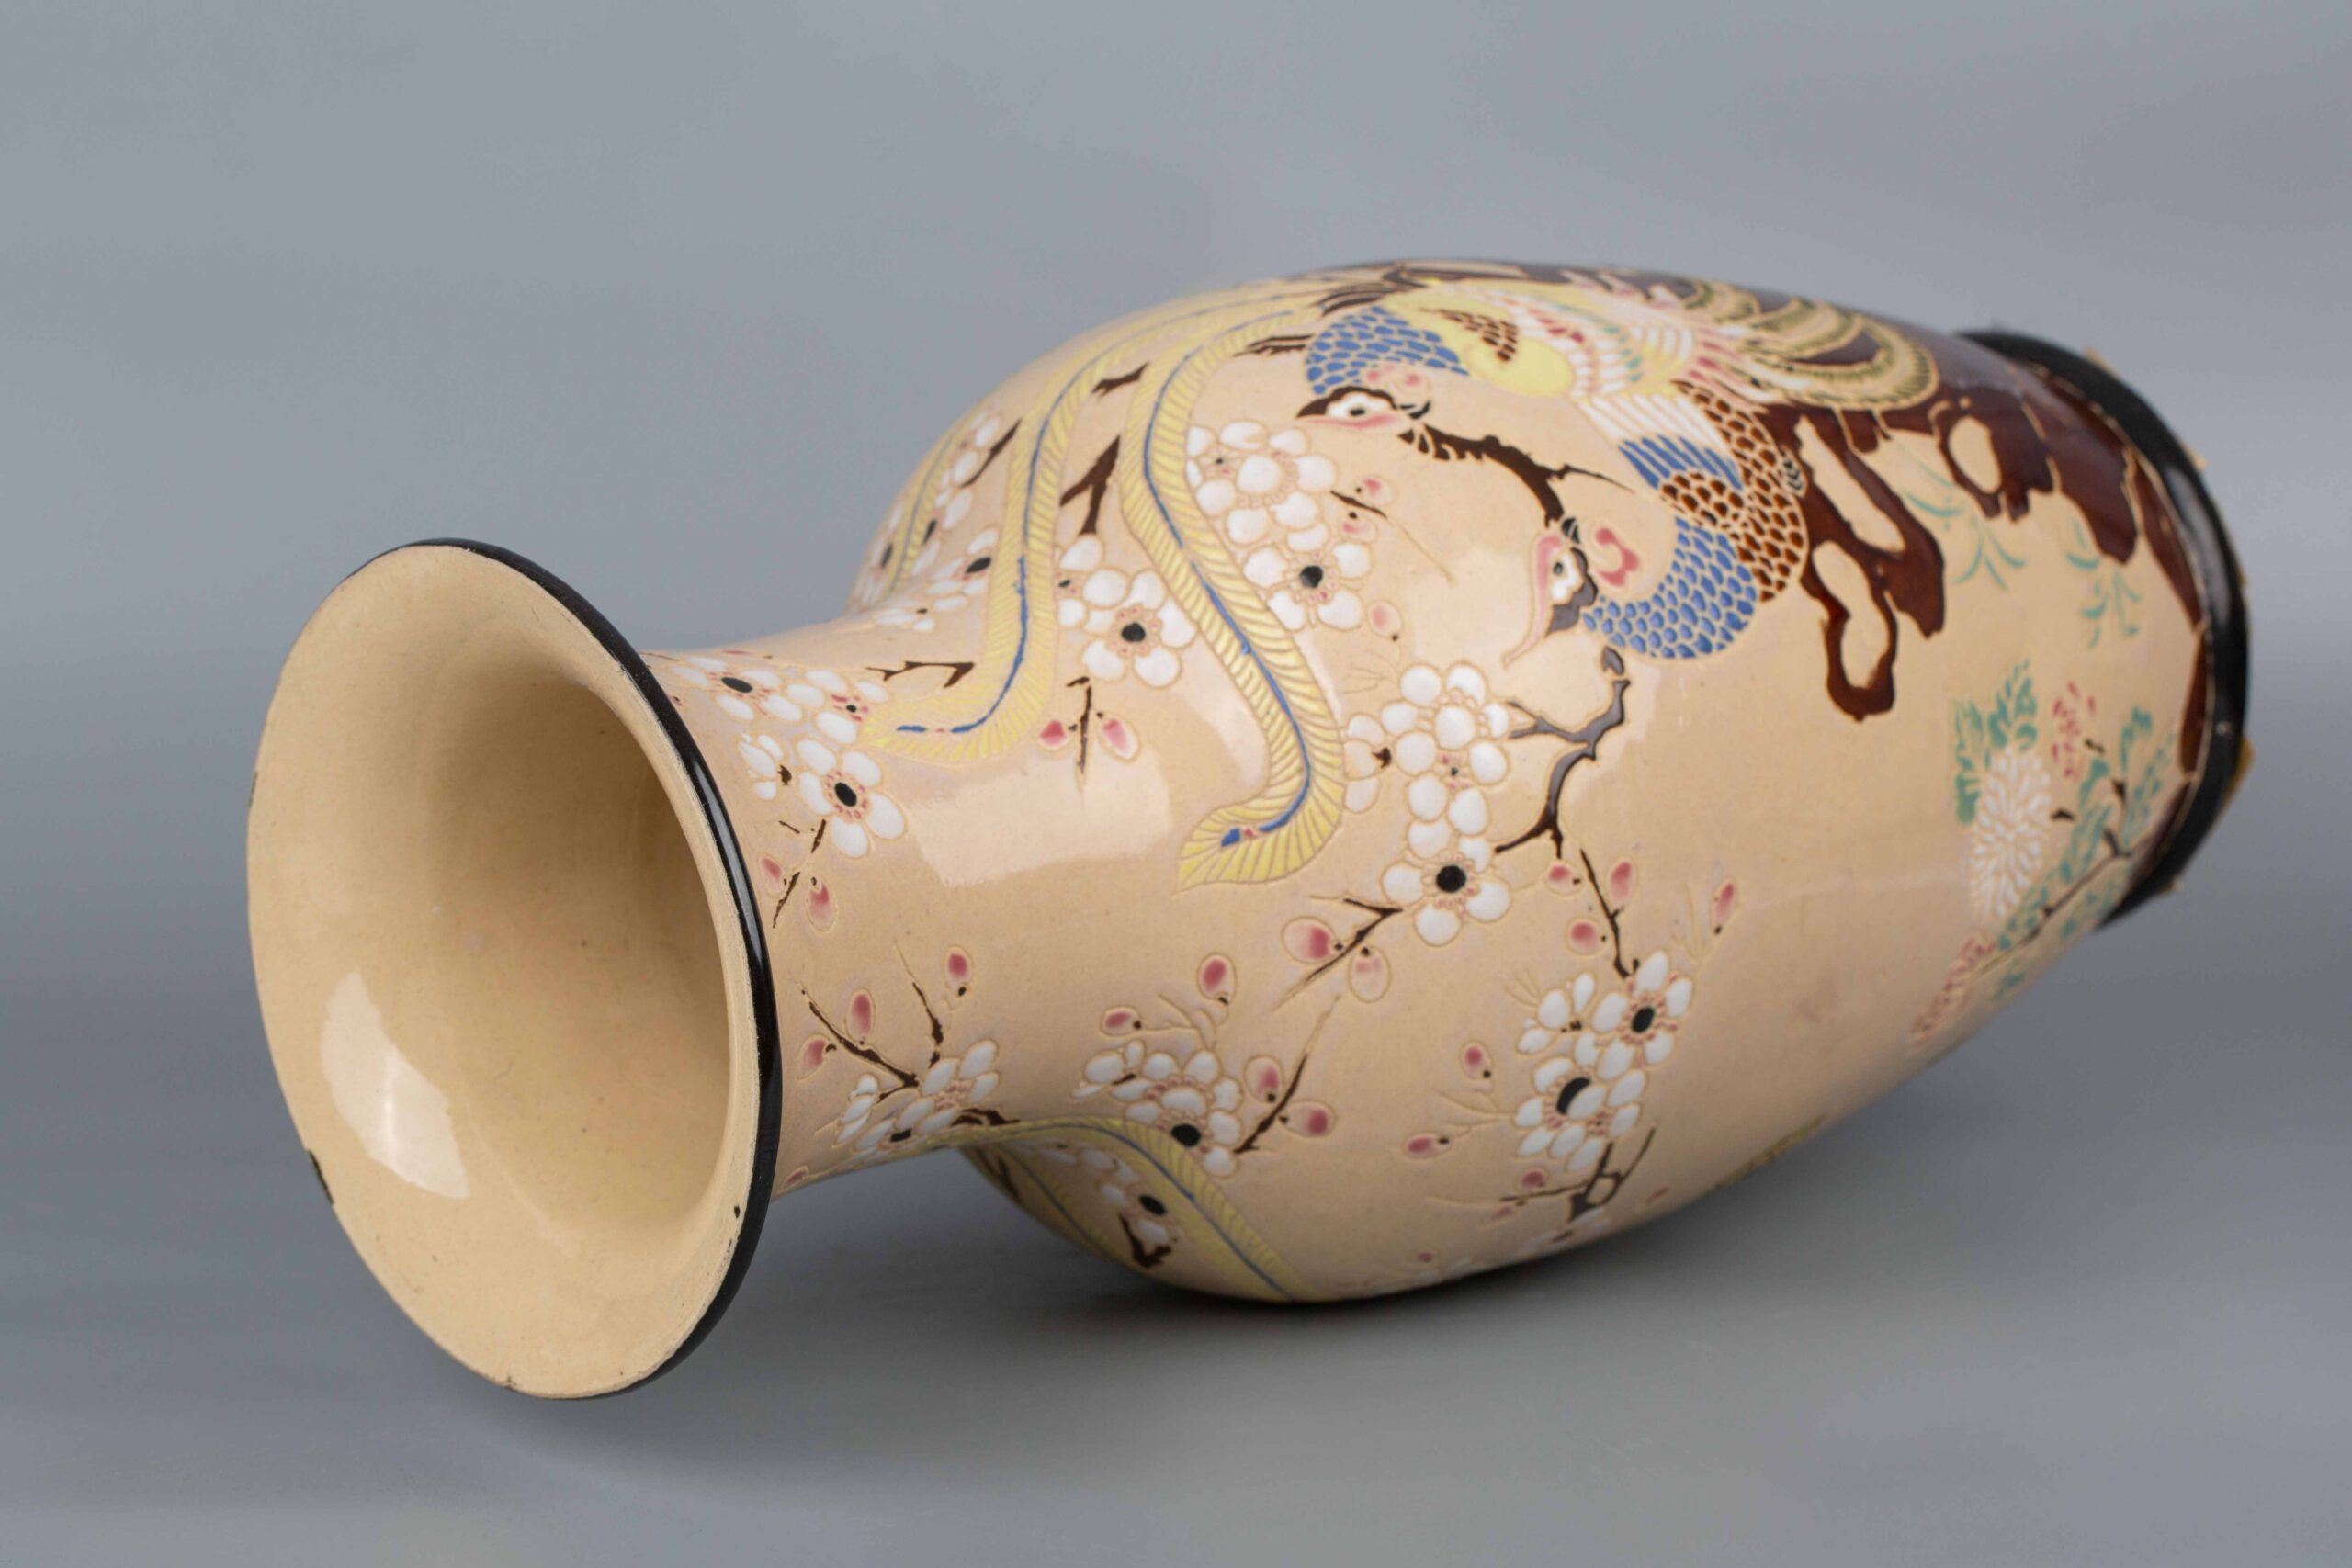 Flower and bird vase, 20th century花鸟赏瓶20世纪– Time Art